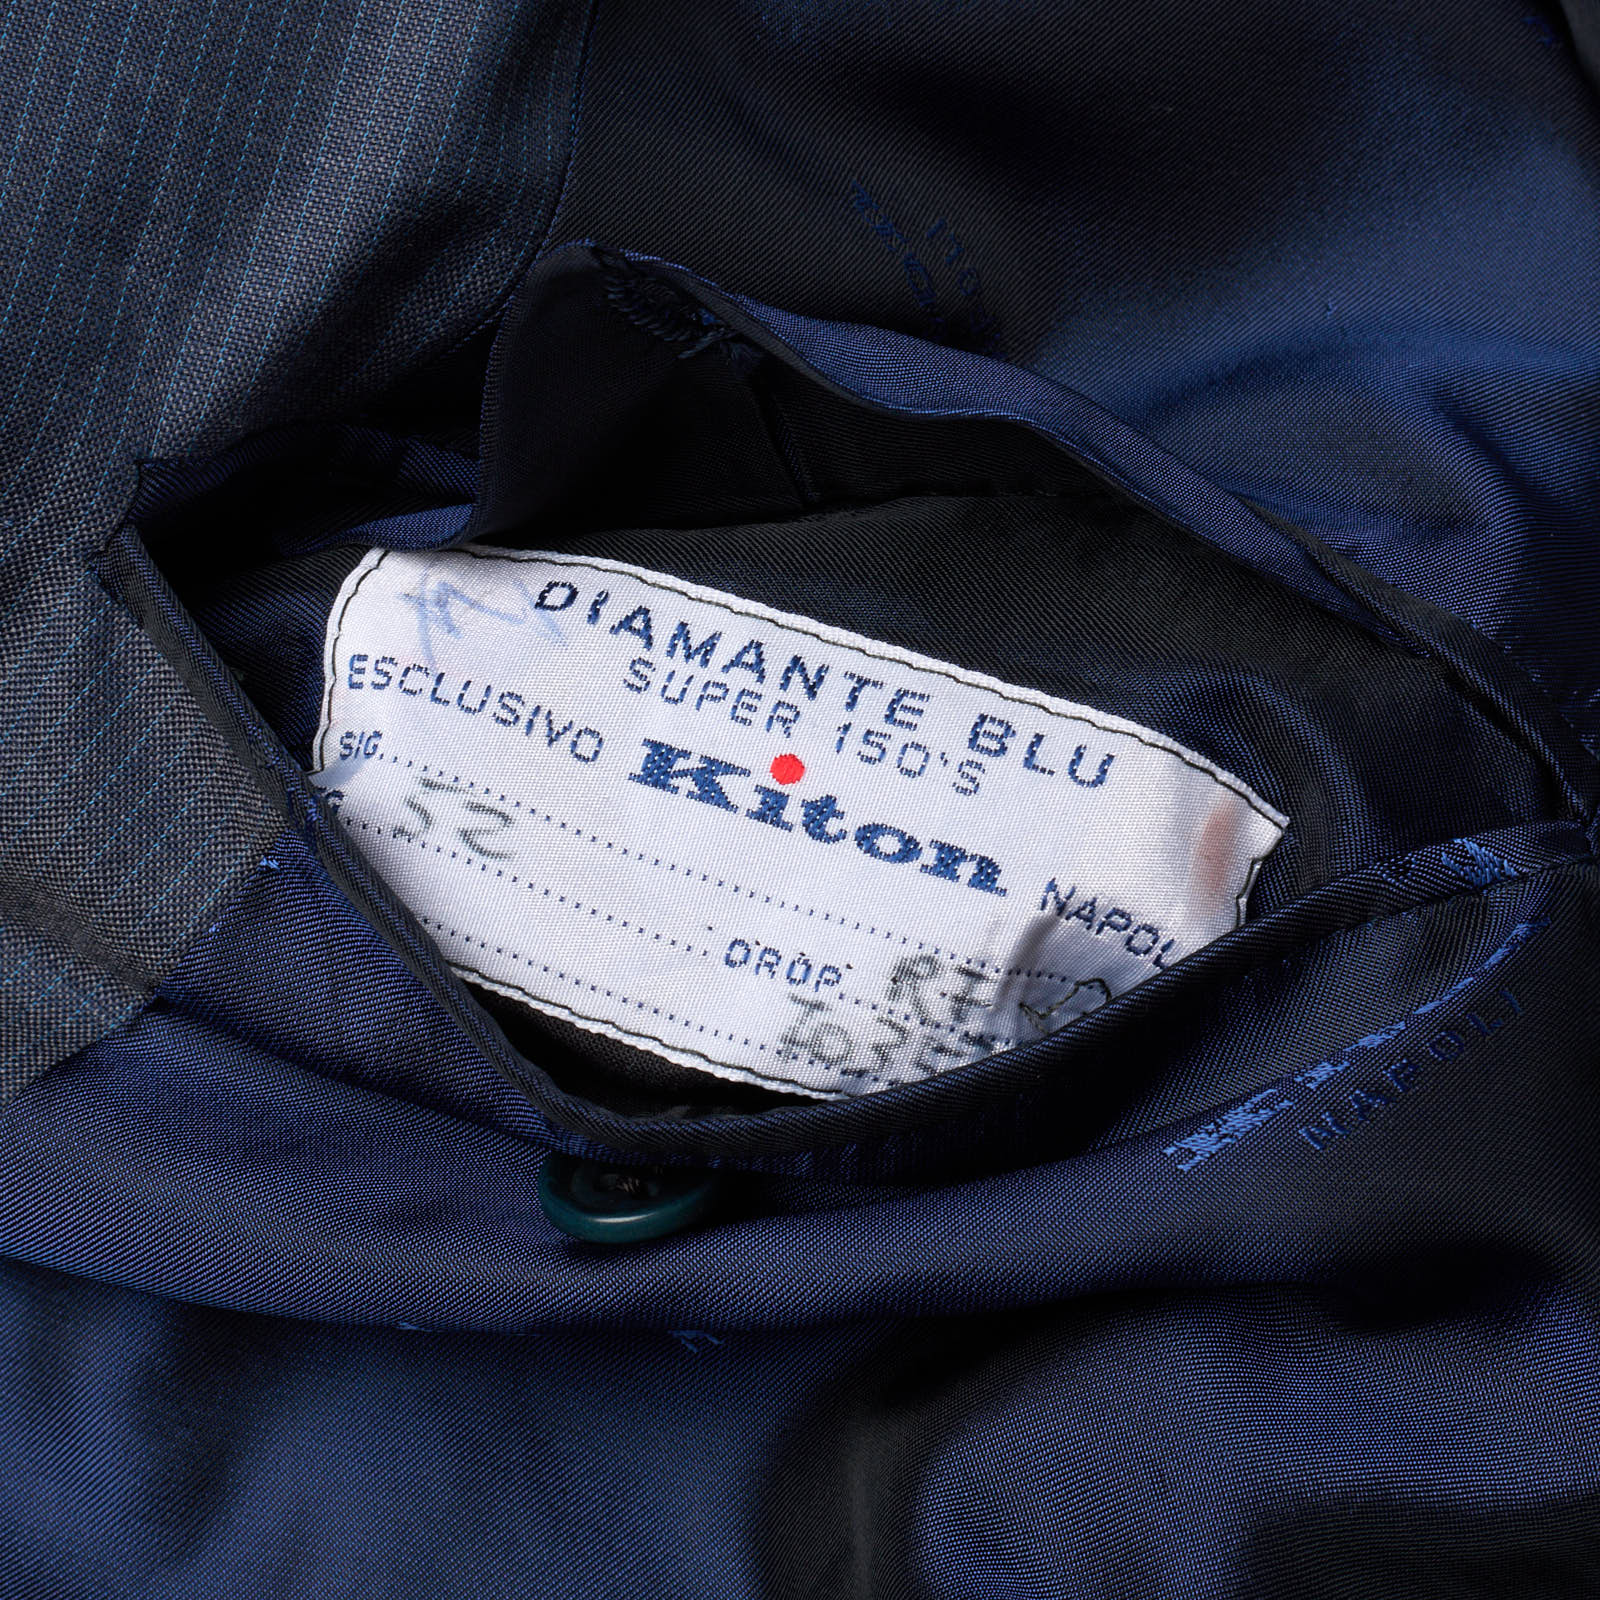 KITON Napoli for VANNUCCI Handmade Blue Striped Wool Suit EU 52 NEW US 42